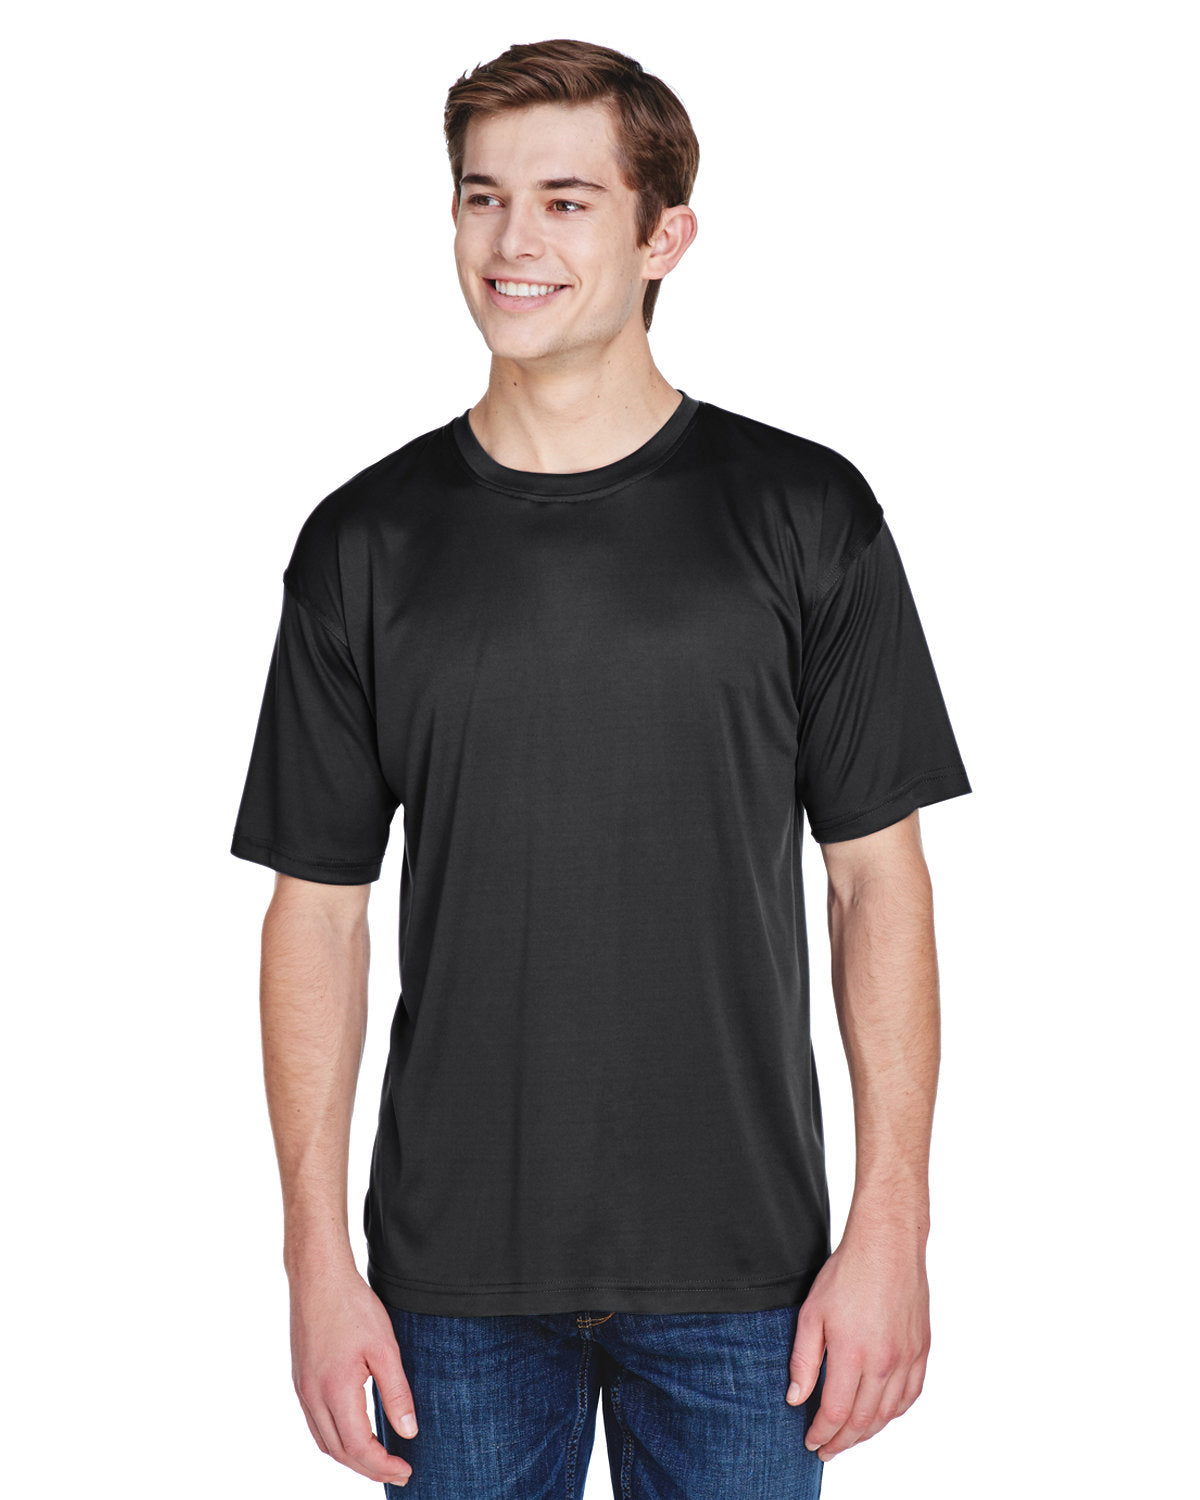 UltraClub 8620 Men's Cool & Dry Performance T-Shirt